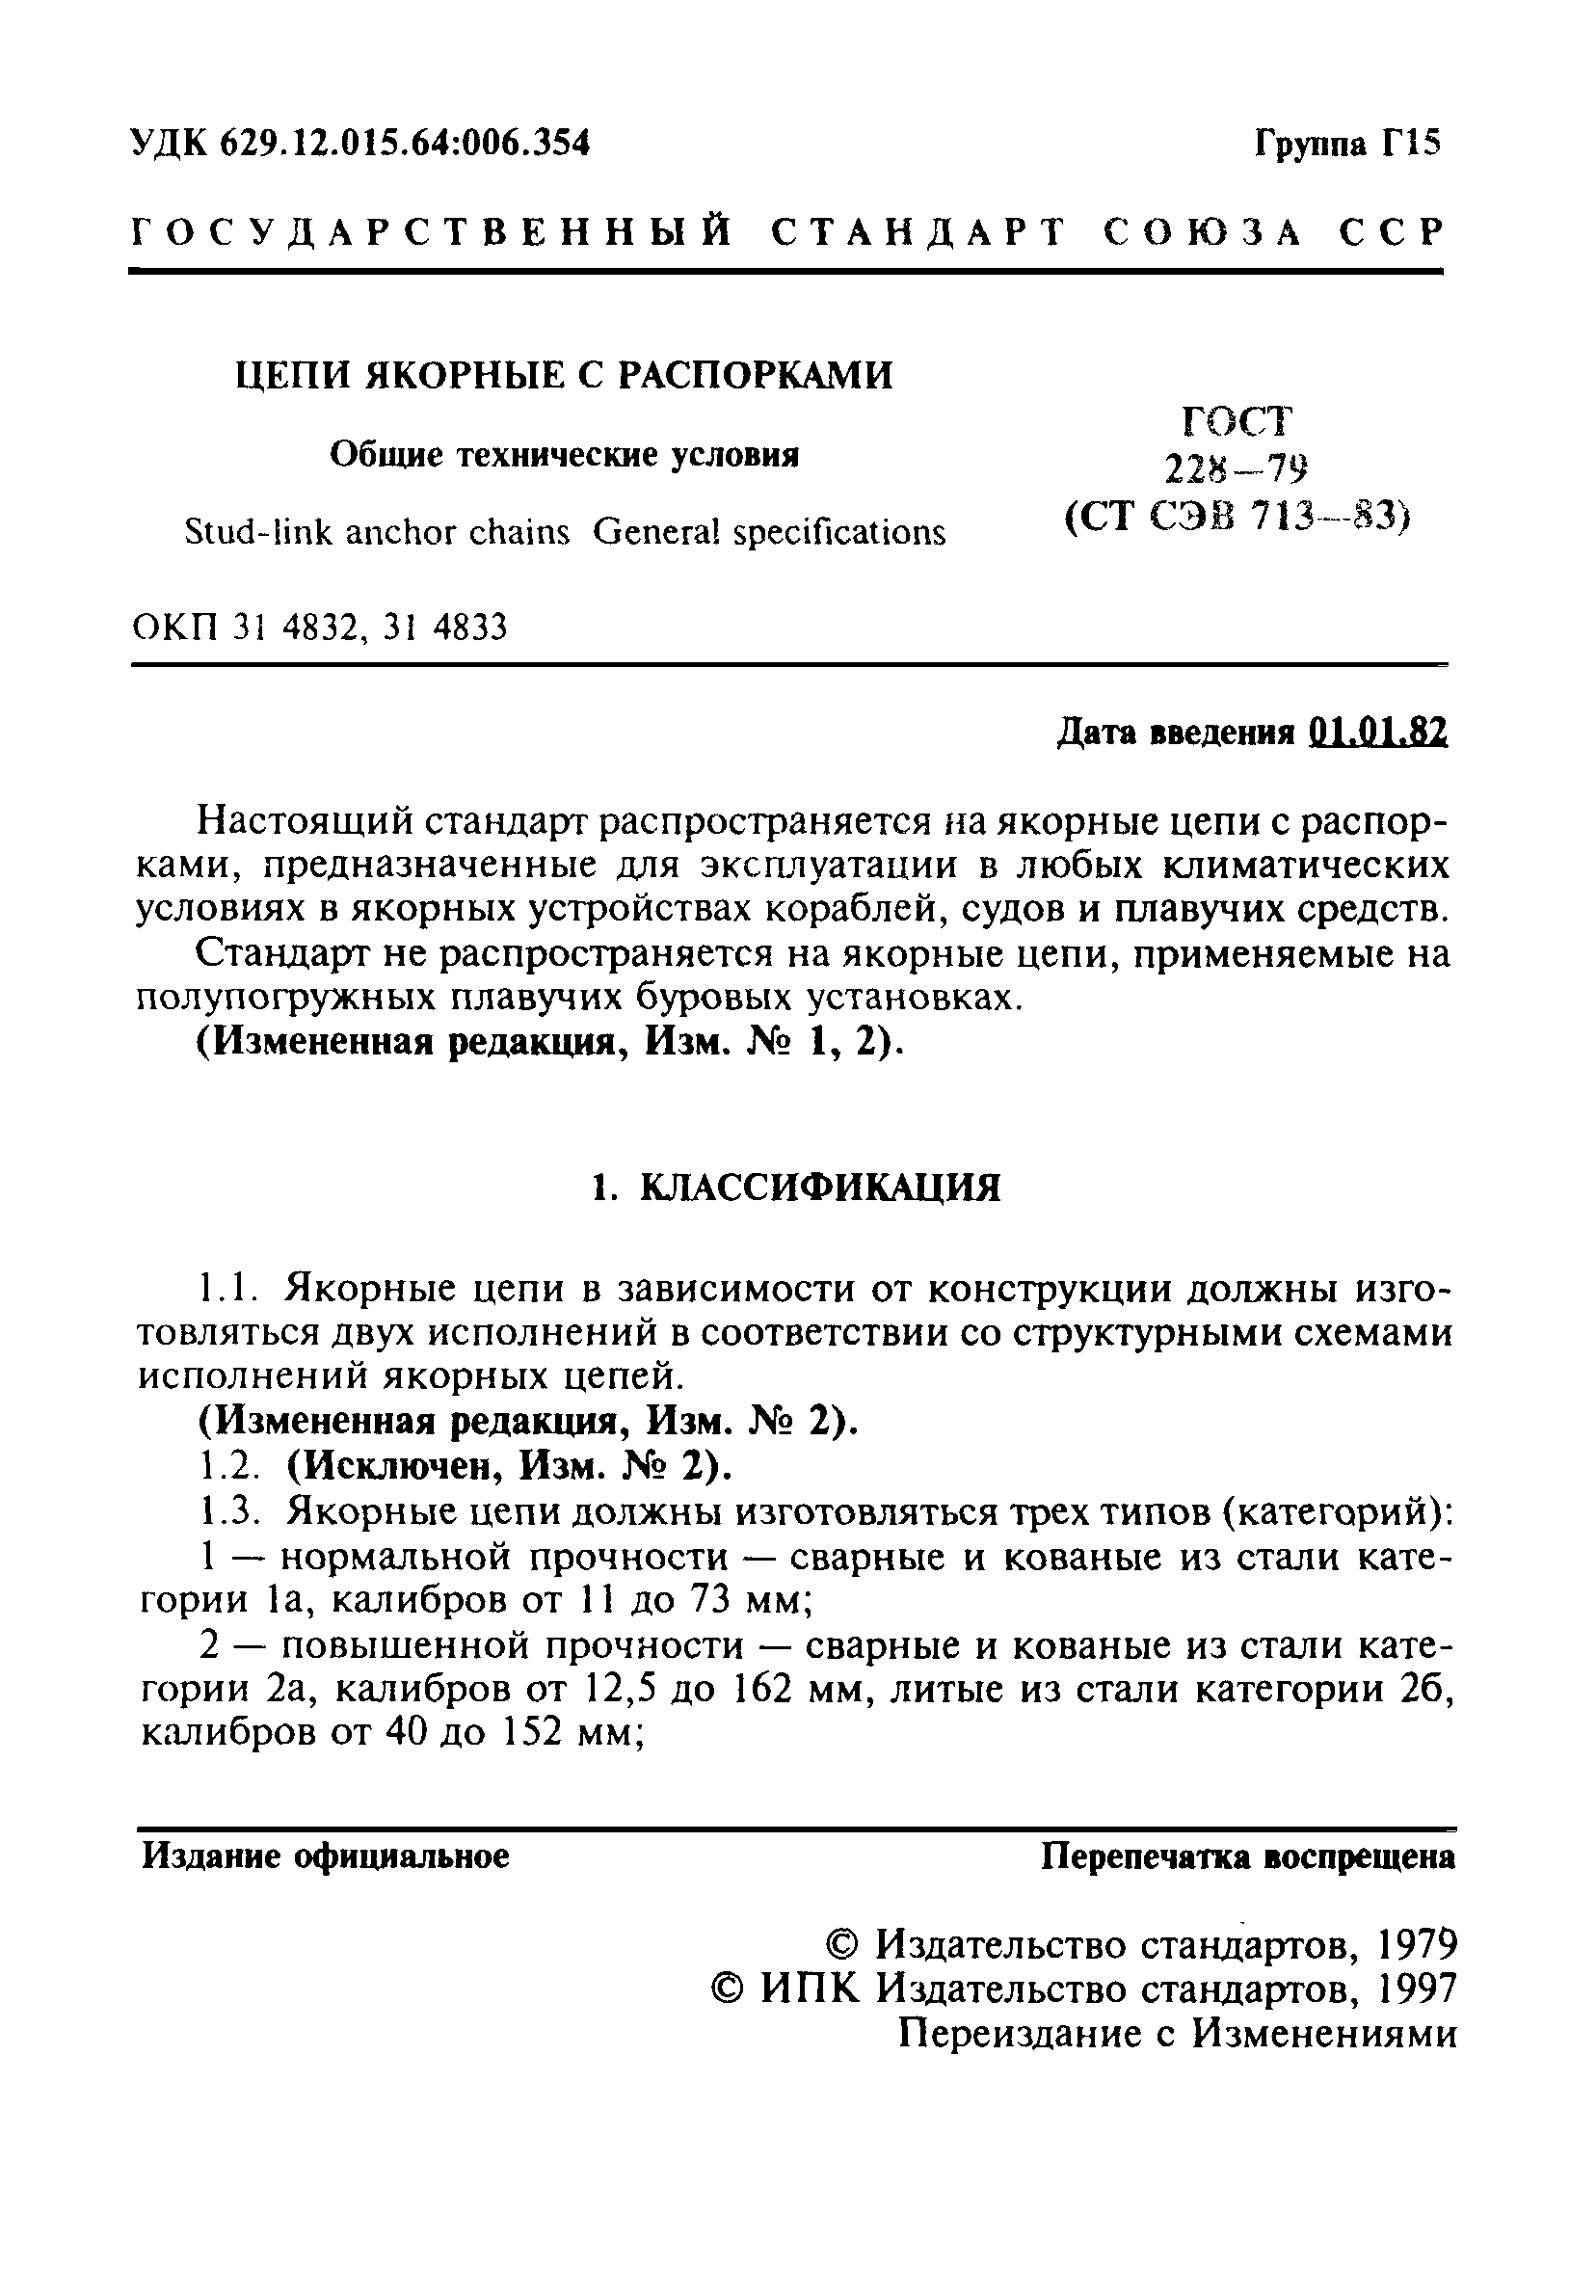 ГОСТ 228-79